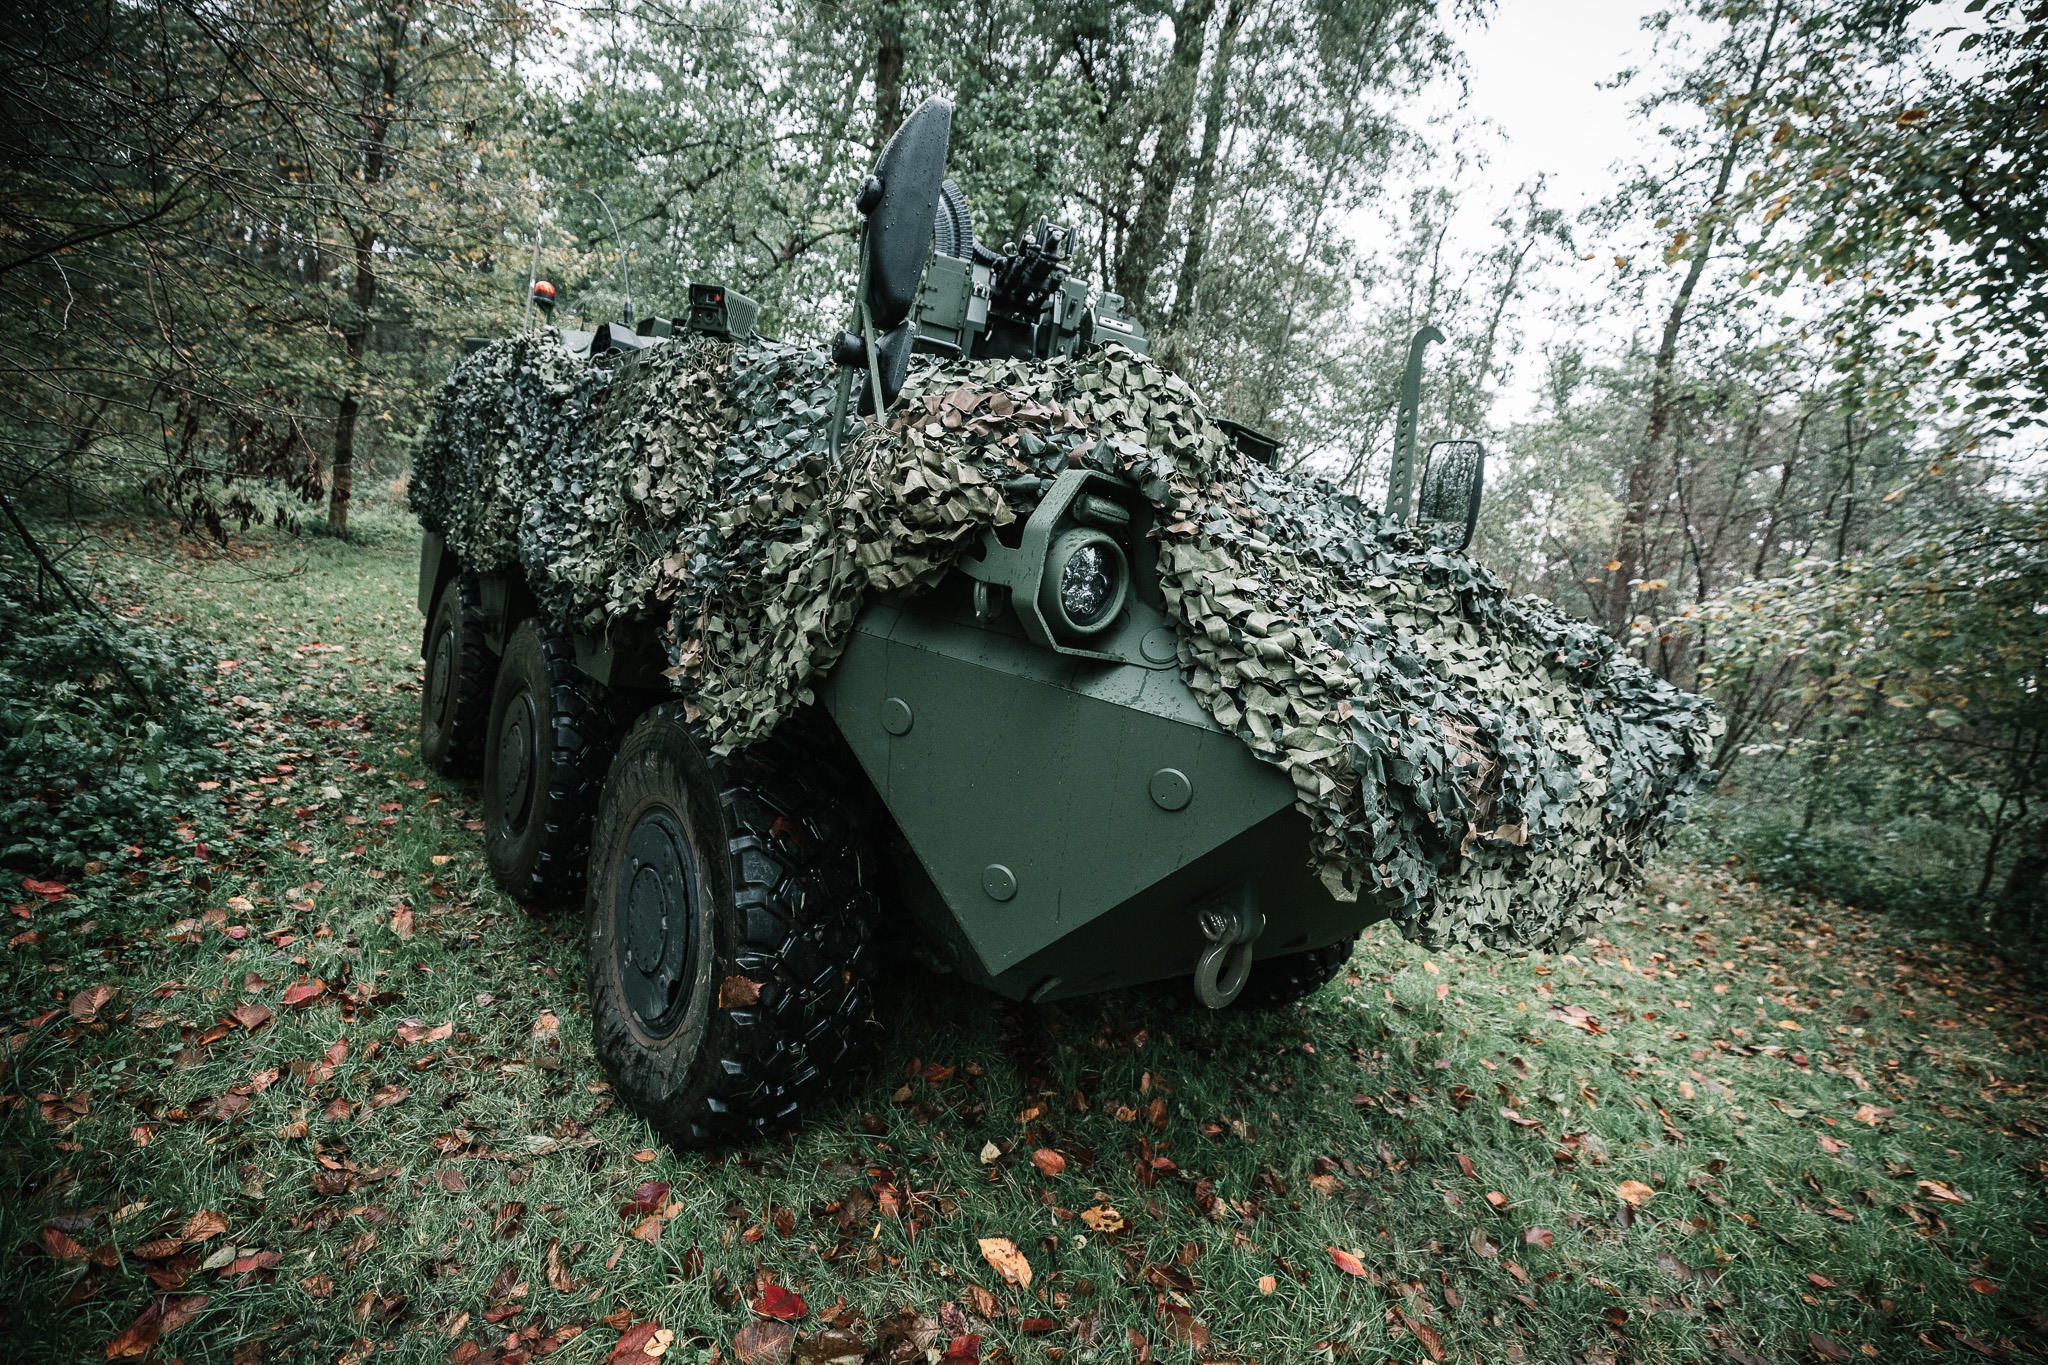 2021-02-08 08:12:25 | Austrian army to receive more Pandur Evo wheeled armoured vehicles